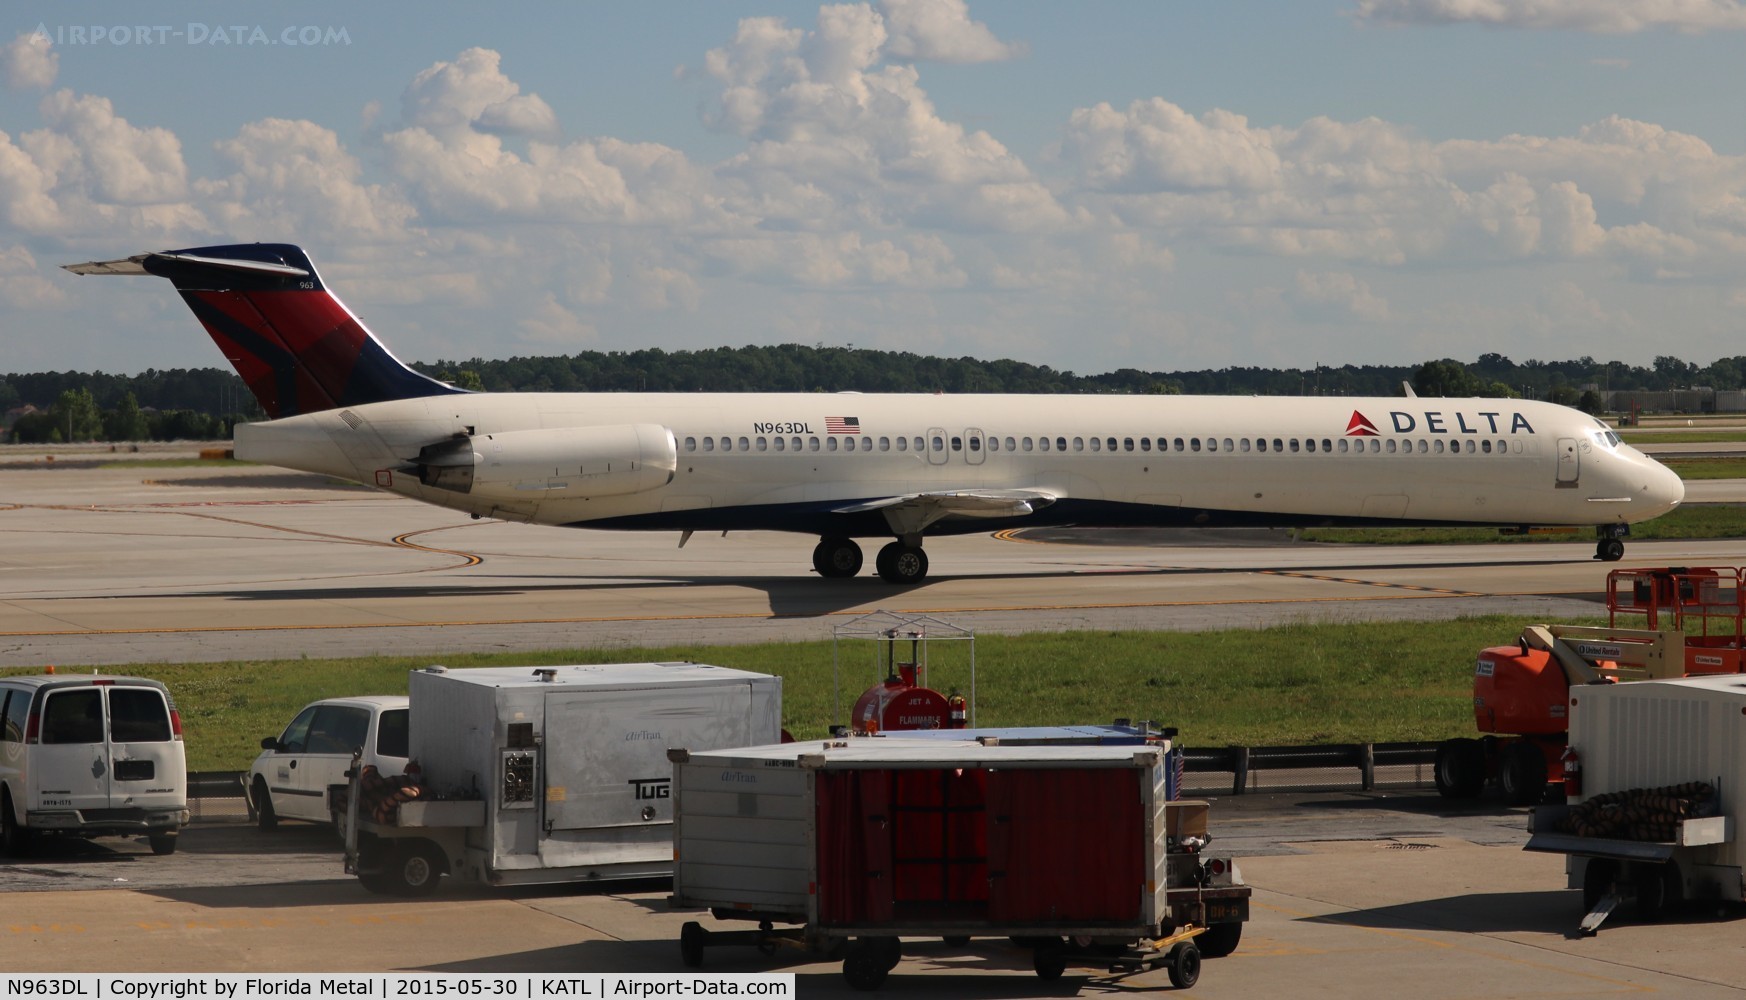 N963DL, 1990 McDonnell Douglas MD-88 C/N 49982, Delta